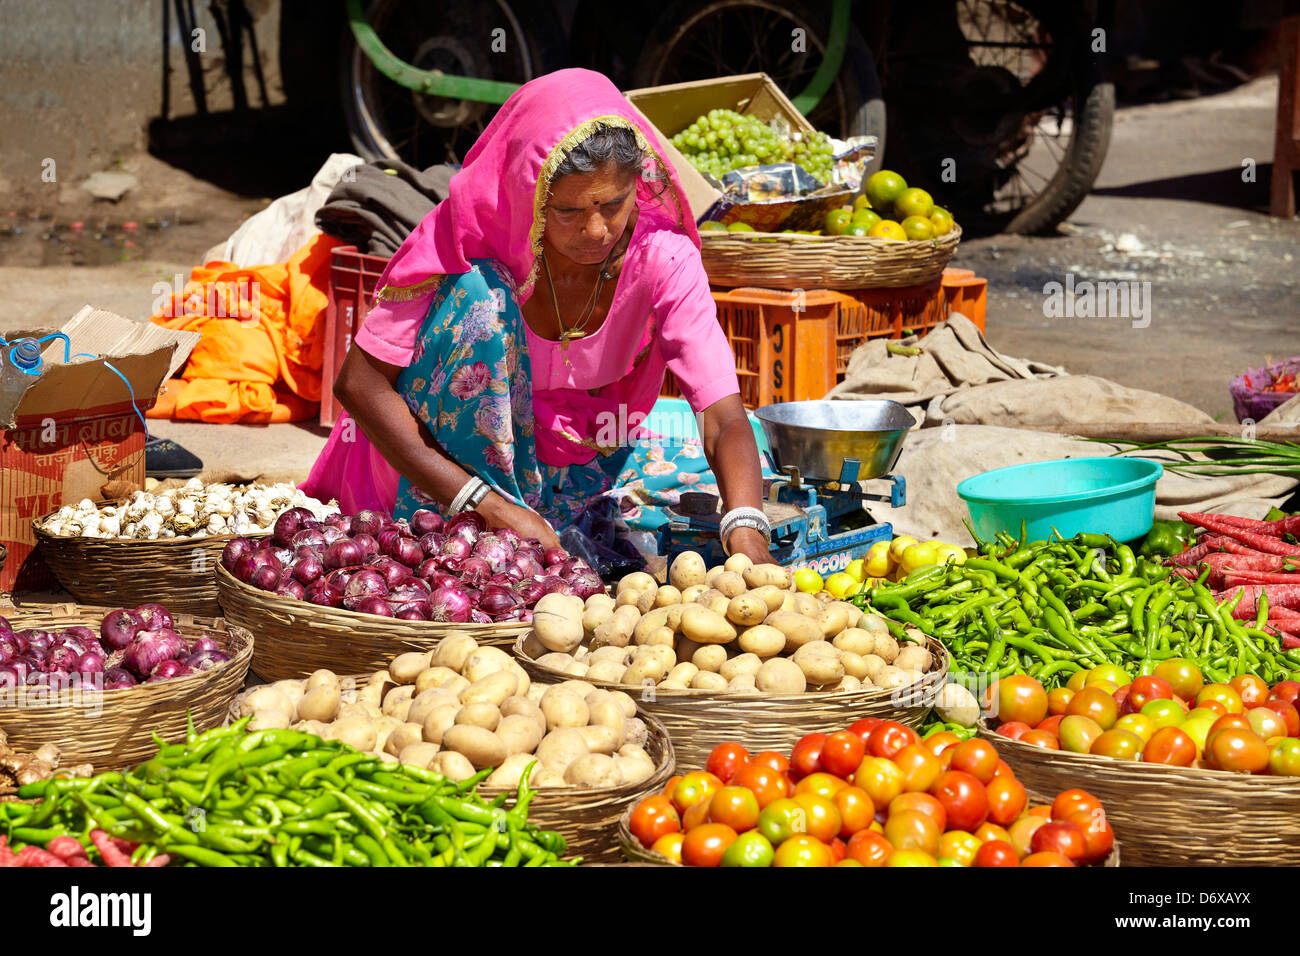 Pushkar street scene, india donna vendita di verdure su street market, Pushkar, Rajasthan, India Foto Stock